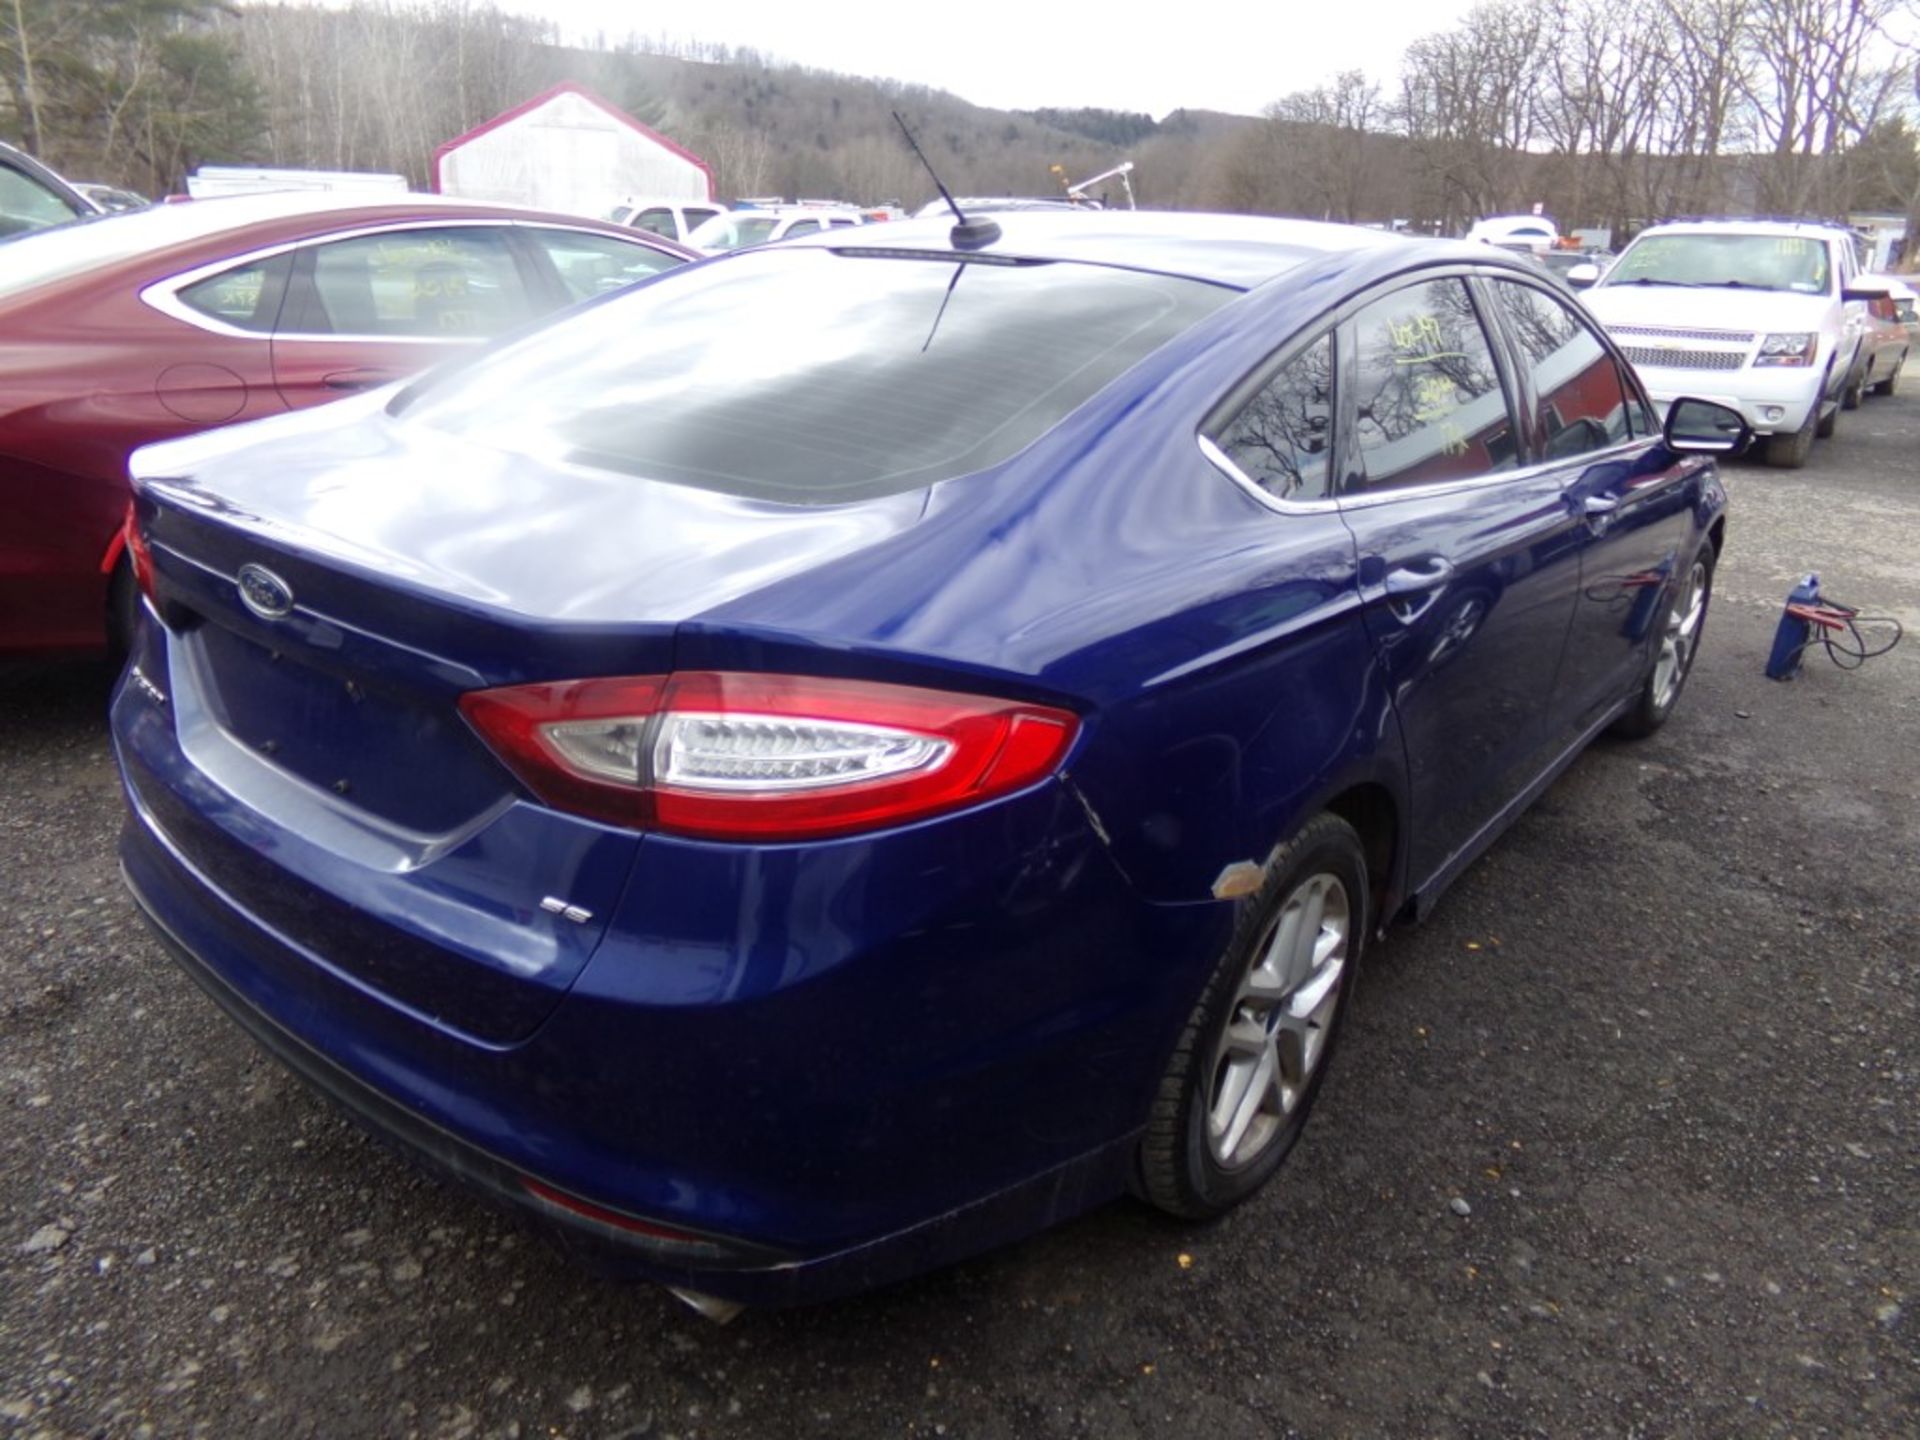 2014 Ford Fusion SE, Blue, 174,739 Miles, VIN#1FA6P0H7XE5365423, AIR BAG LIGHT IS ON, MINOR DAMAGE - Bild 6 aus 18